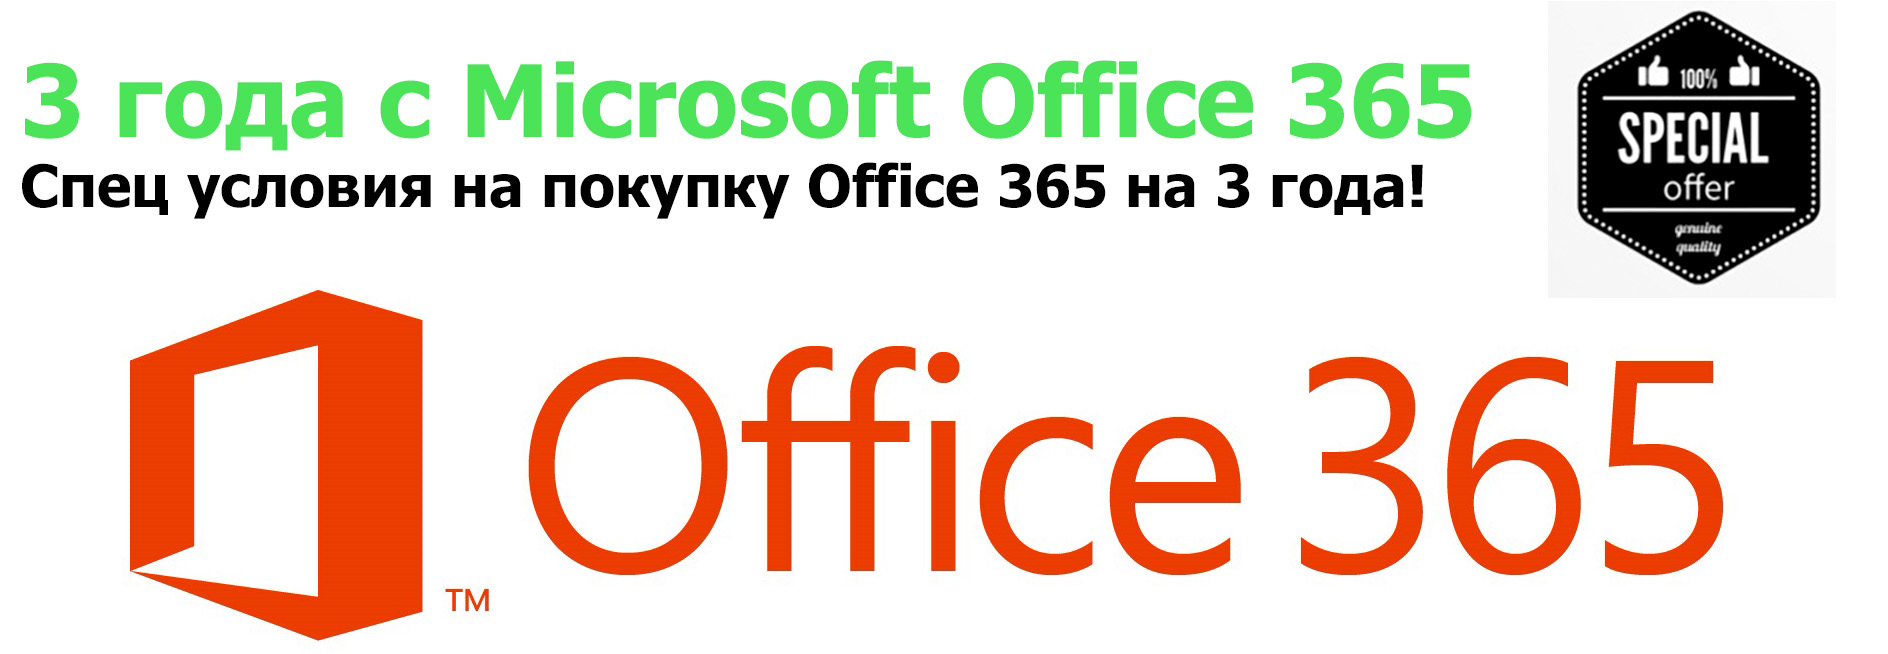 Акция на покупку Microsoft Office 365